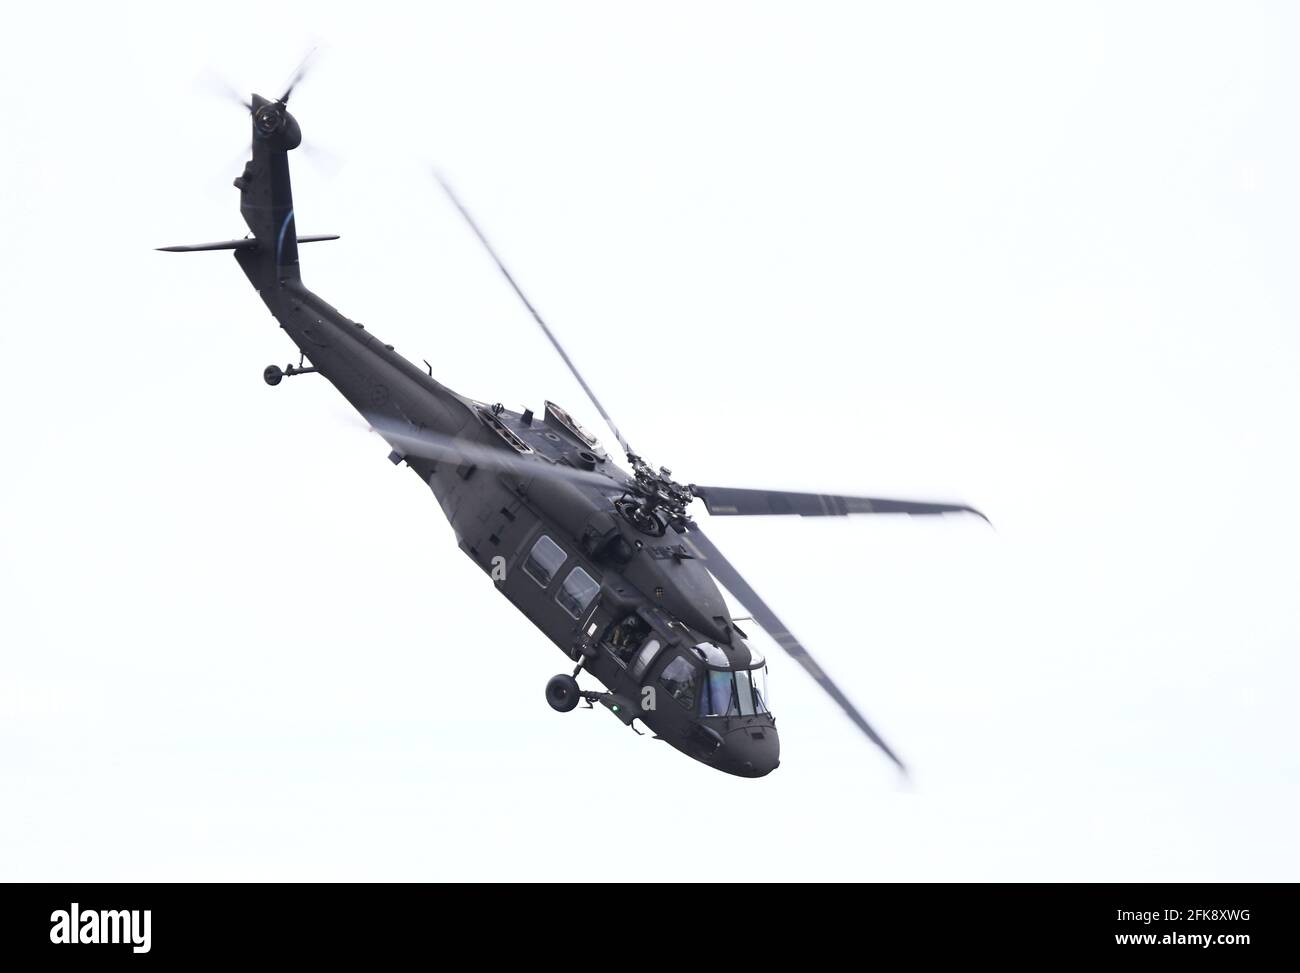 Helikopter 16, HKP16, The Sikorsky UH-60 Black Hawk, presso la base aerea di Malmen. La base aerea di Malmen è una base militare situata a Malmslätt, Linköping, Svezia. Foto Stock